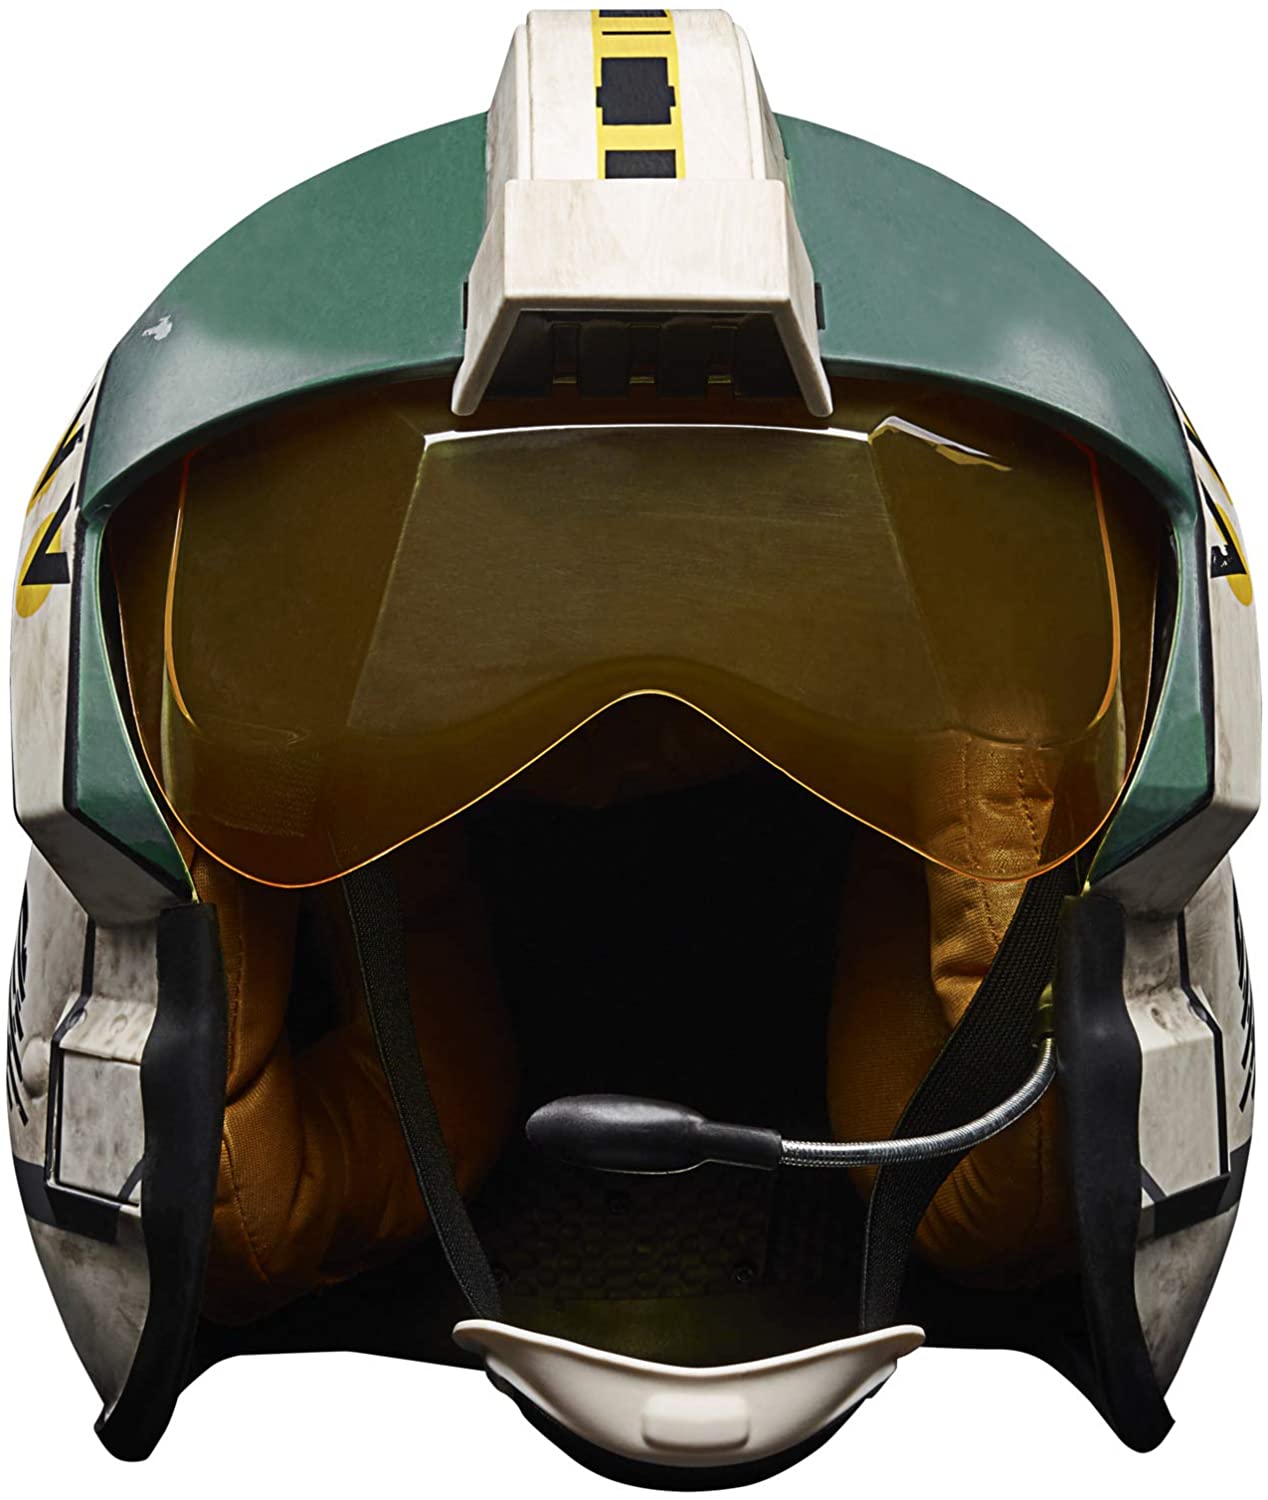 Hasbro Prop Replica Helmet - Star Wars Black Series - Wedge Antilles Battle Simulation